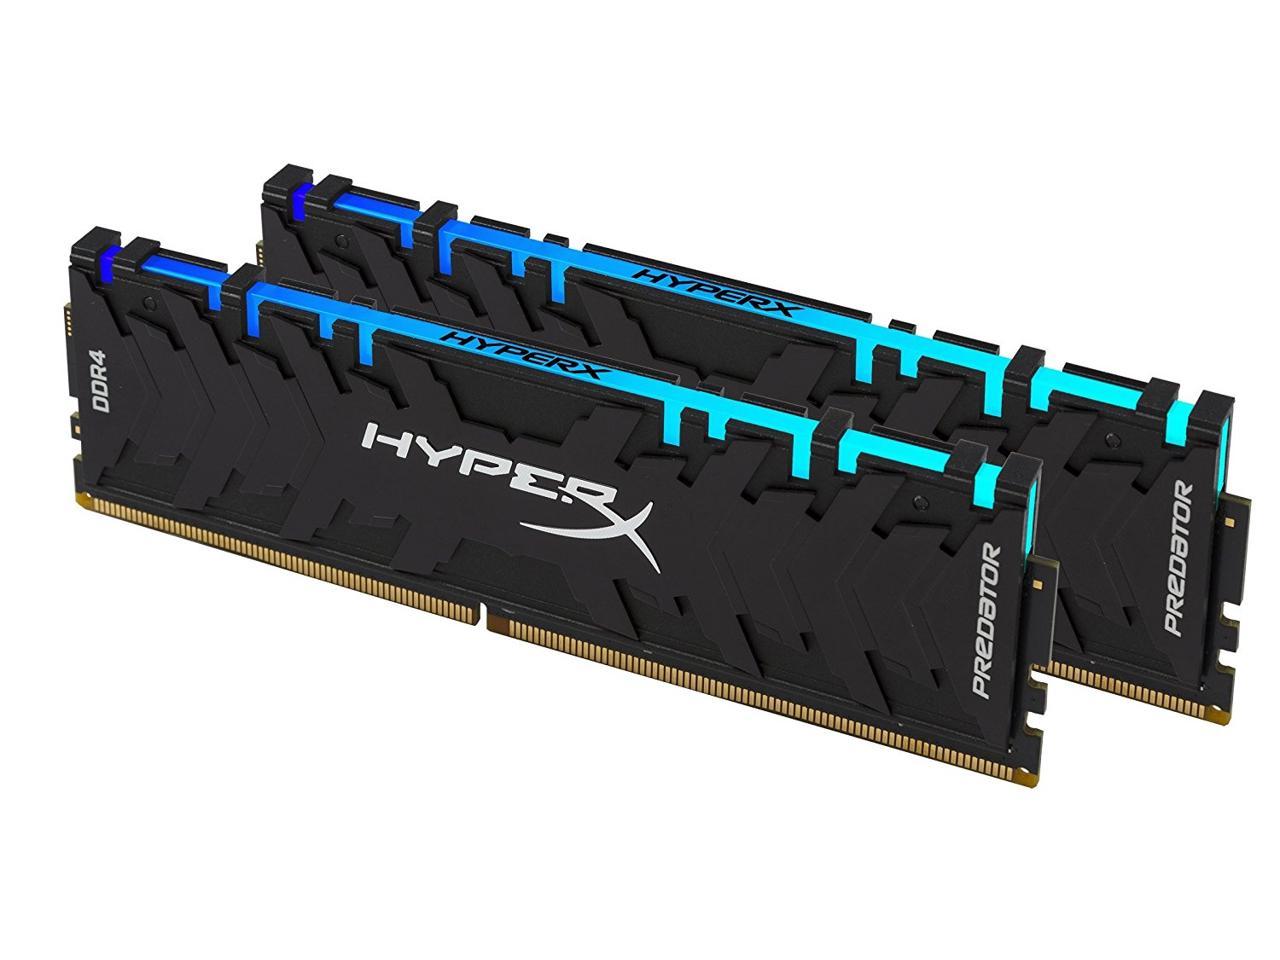 HyperX Predator DDR4 RGB 16GB (2 x 8GB) 4000MHz CL19 DIMM XMP RAM Memory/Infrared Sync Technology Black (HX440C19PB3AK2/16)